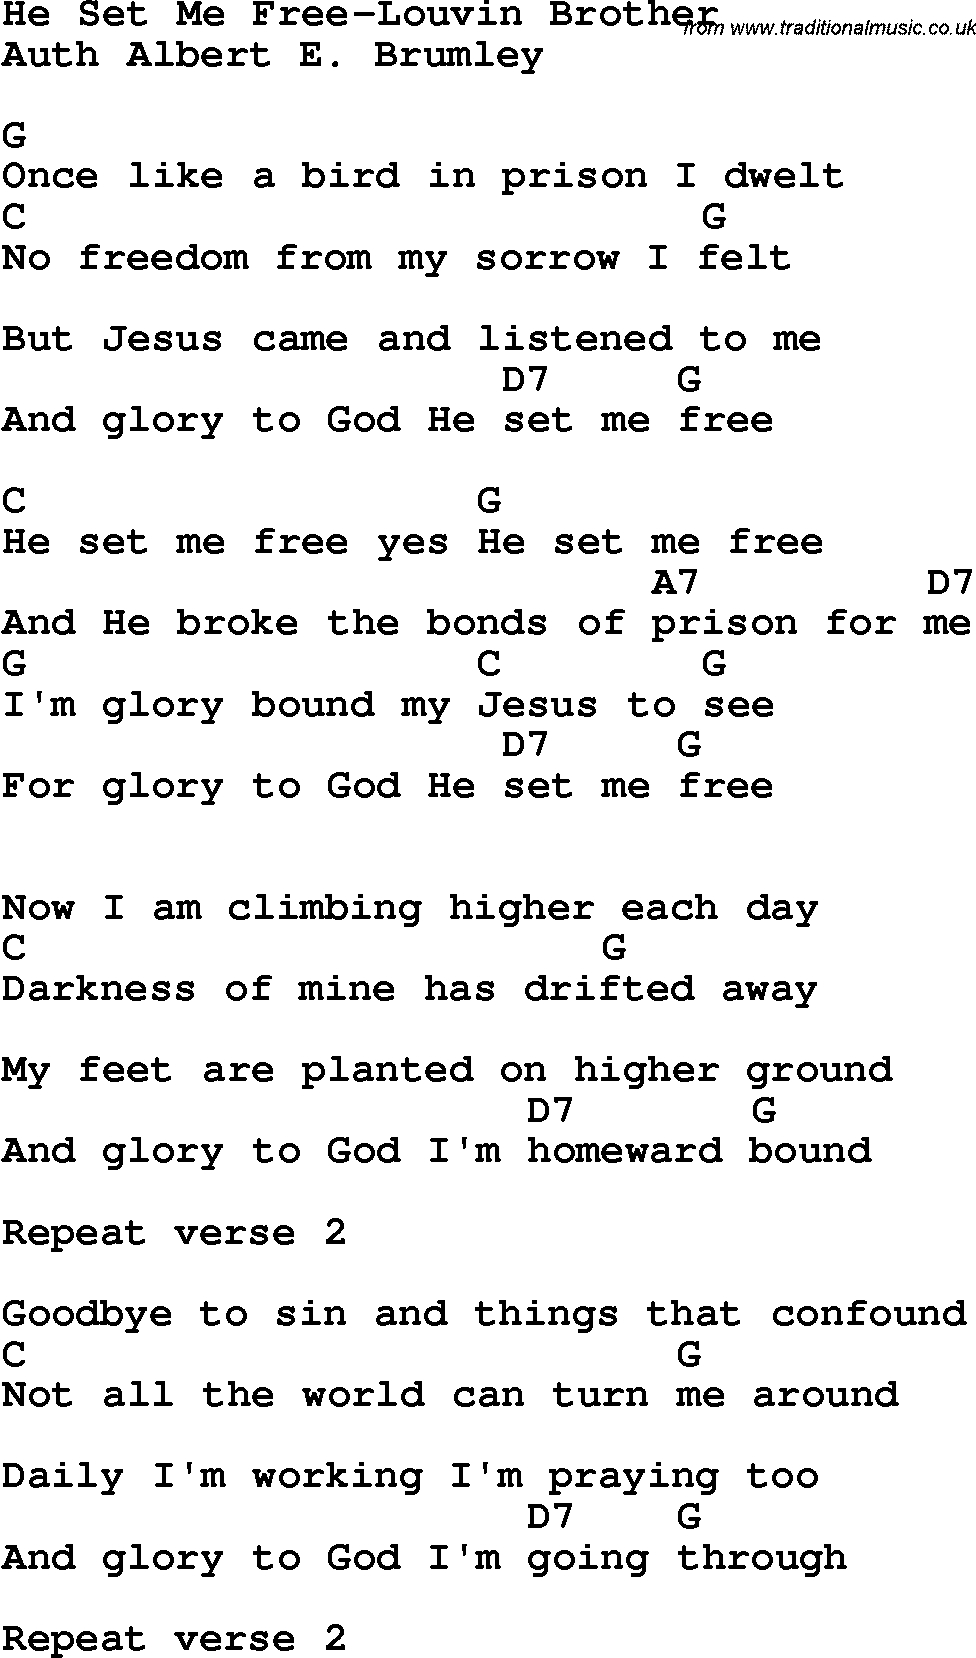 Free Printable Gospel Music Lyrics | Free Printable